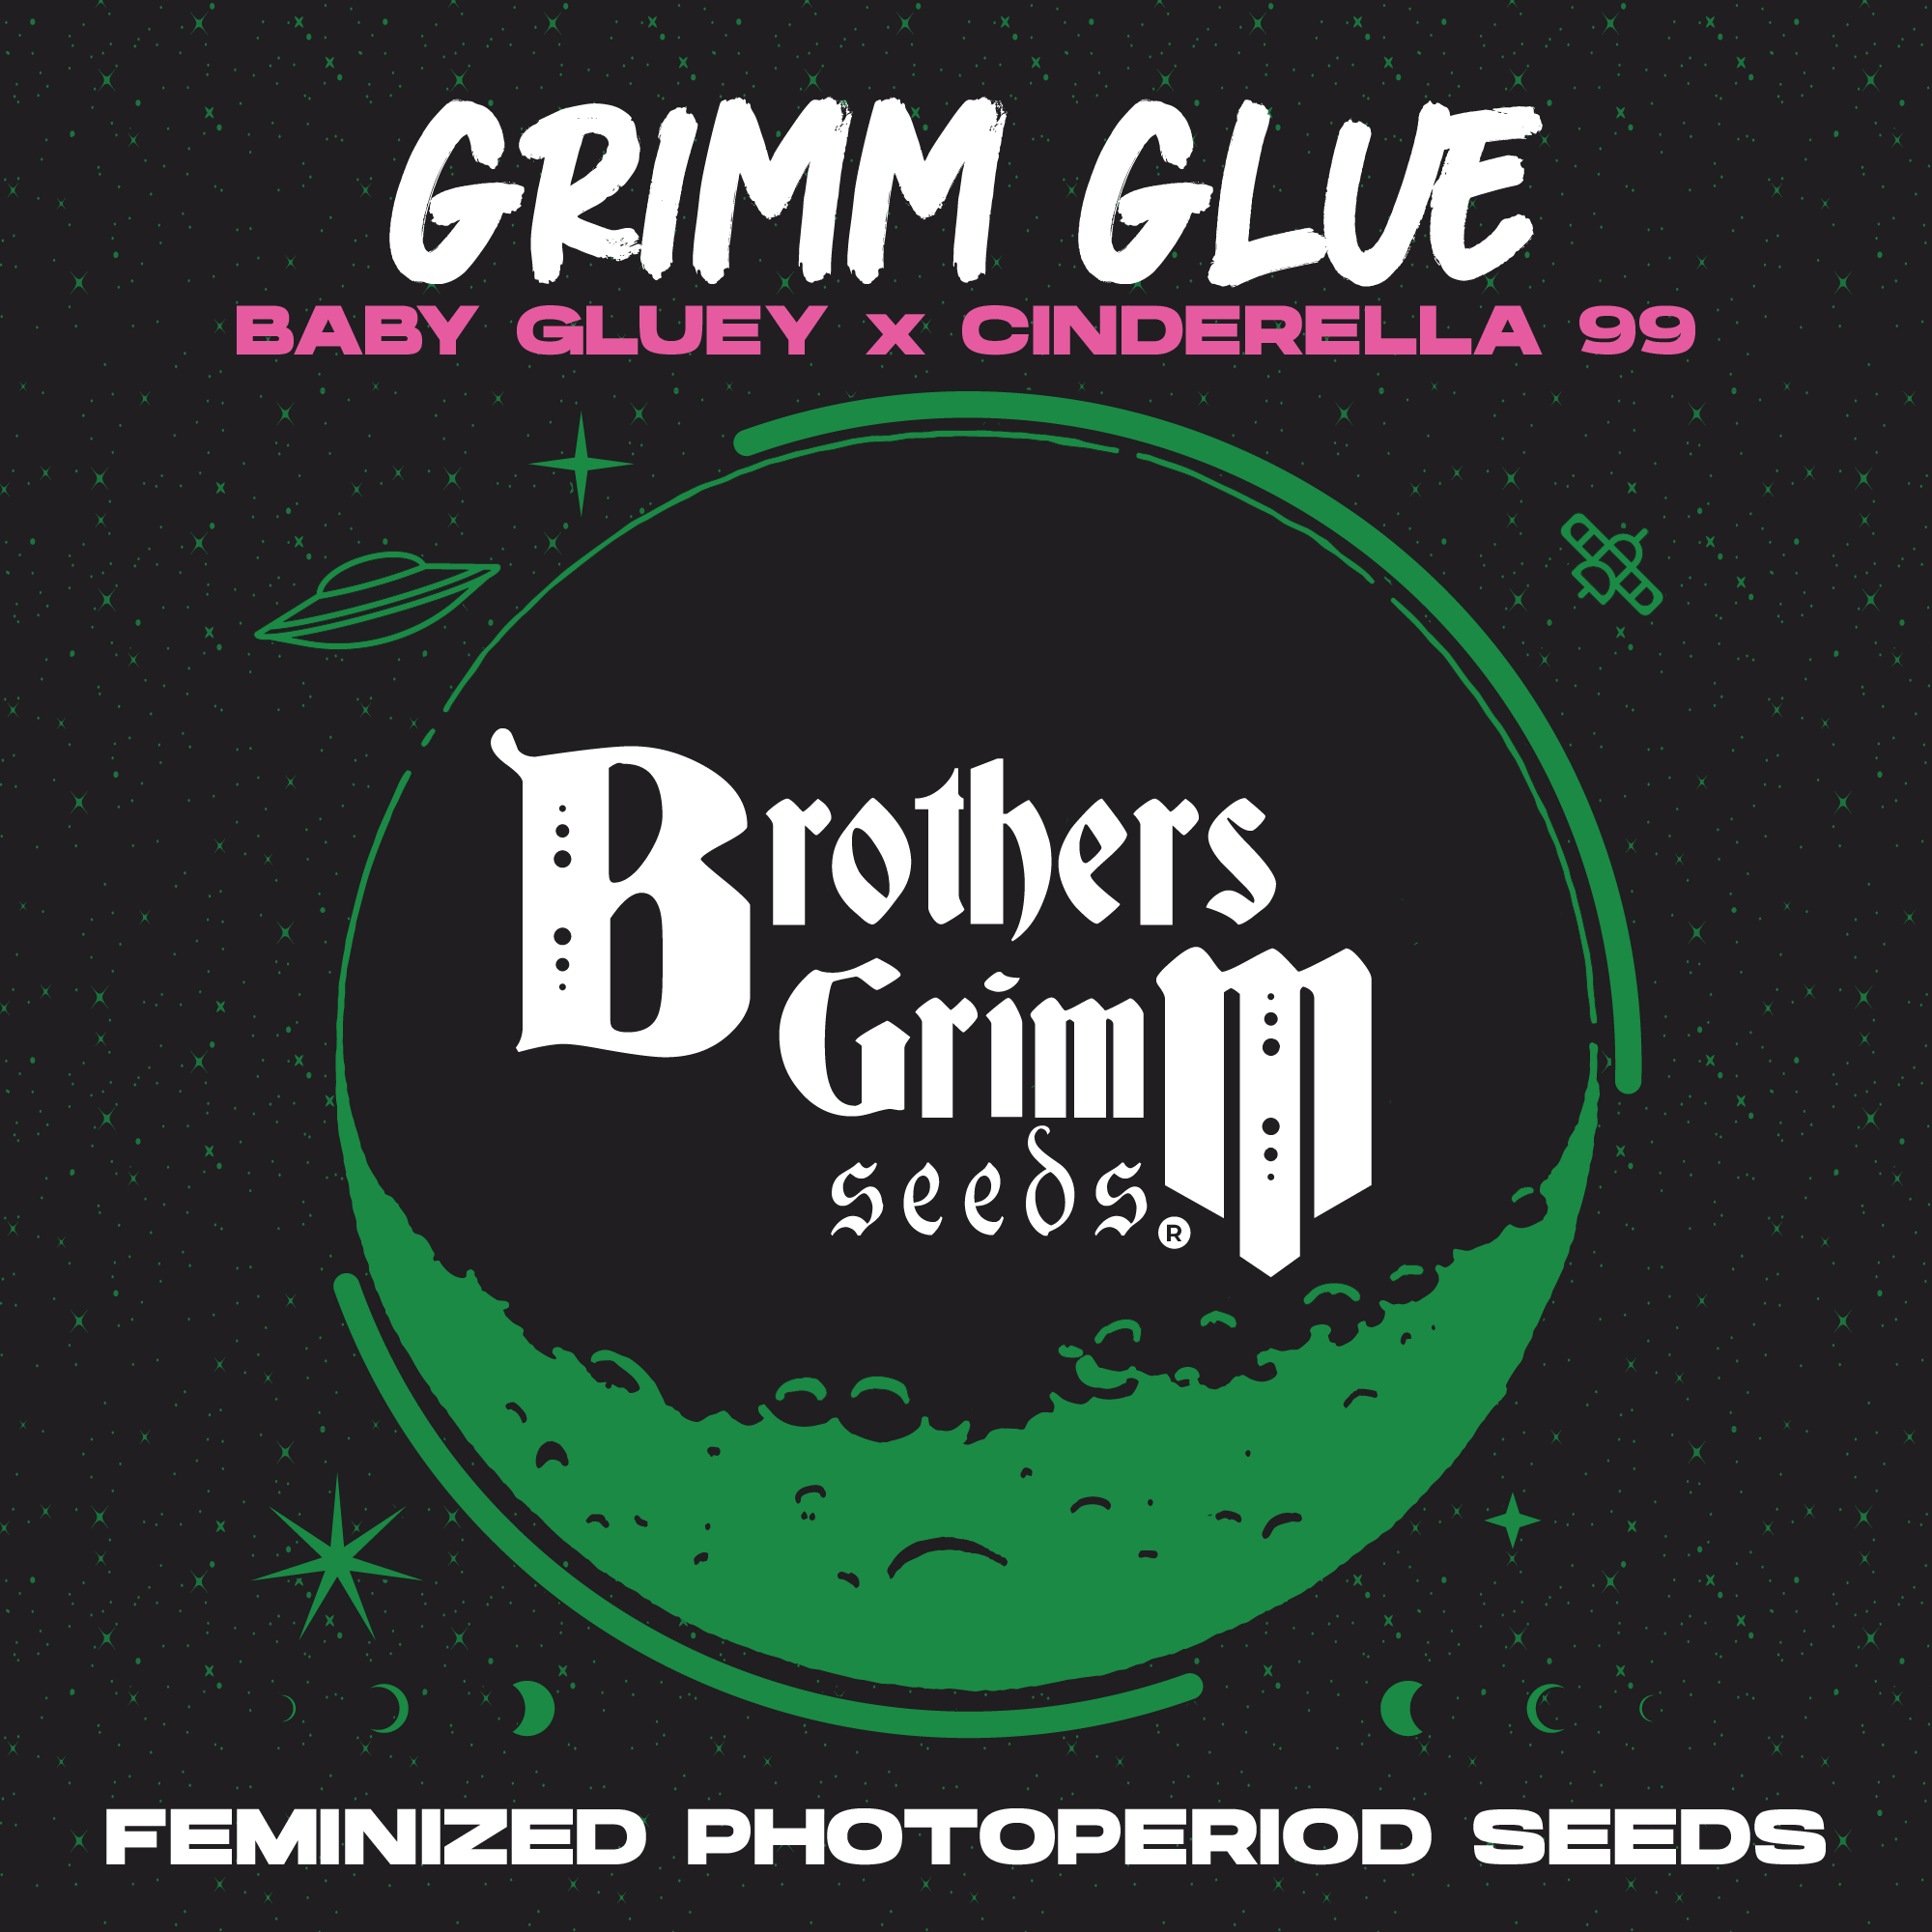 Grimm Glue - 100 FEMINIZED Seeds